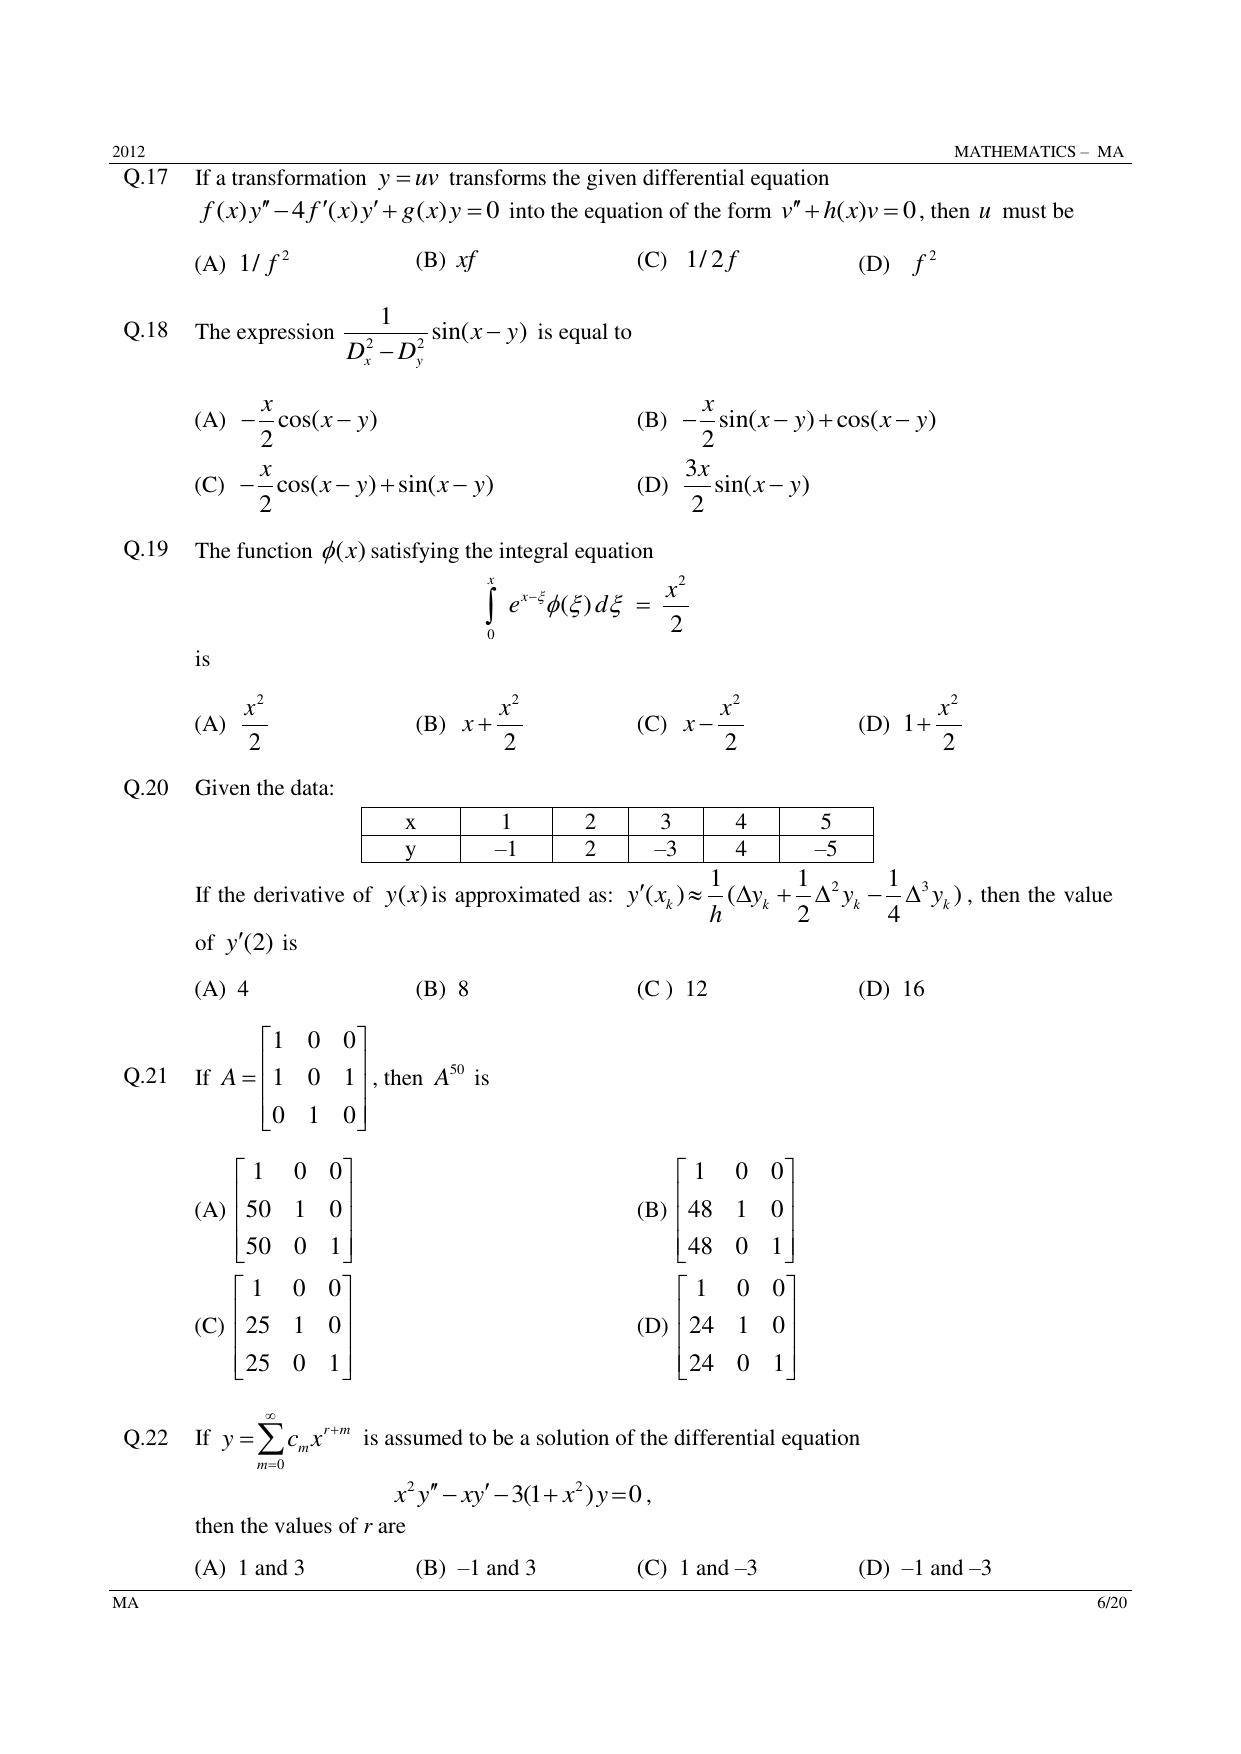 GATE 2012 Mathematics (MA) Question Paper with Answer Key - Page 6